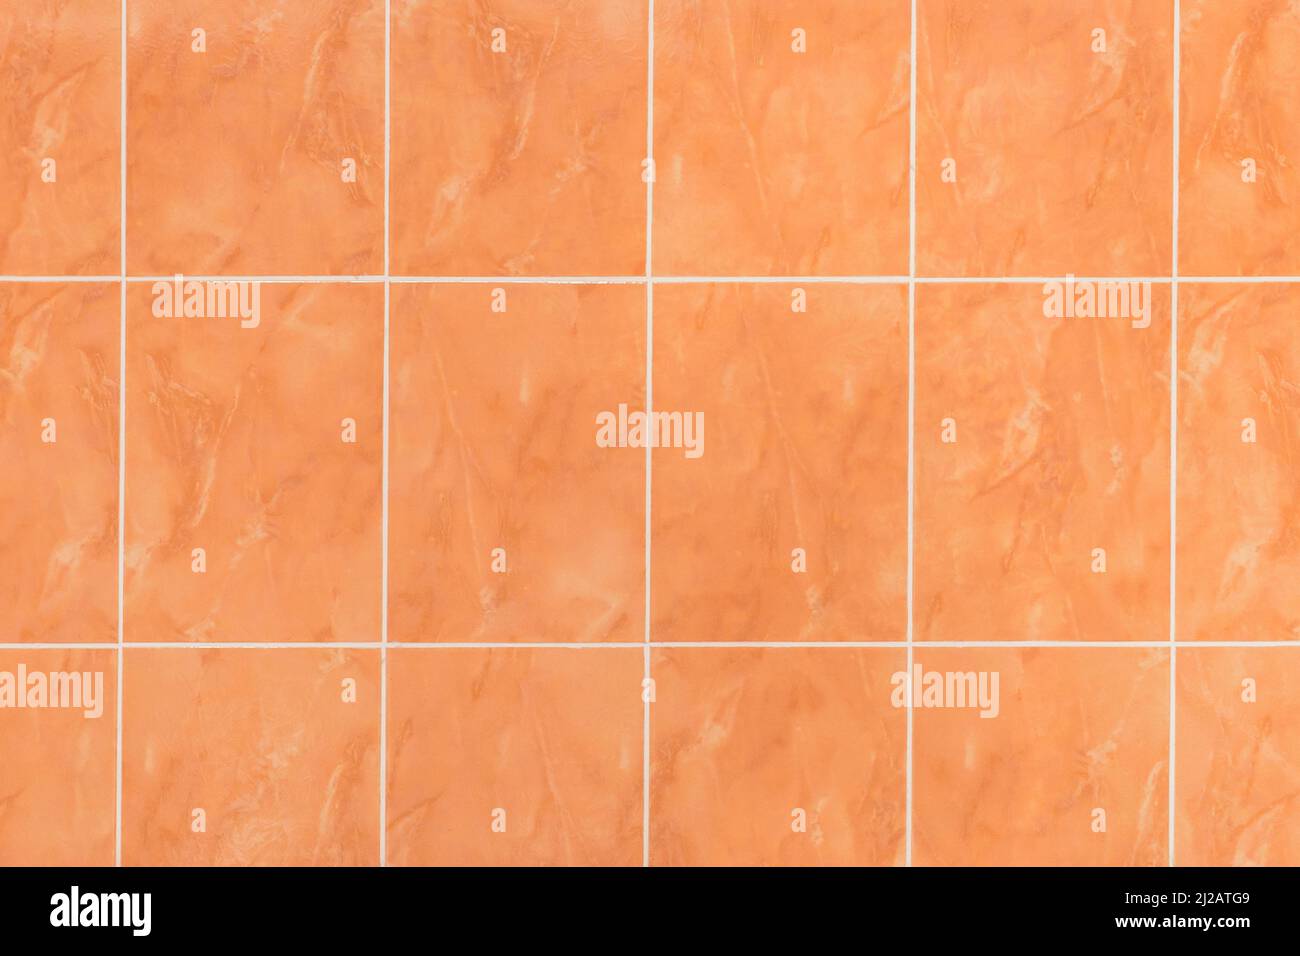 Wall orange ceramic tiles abstract interior design kitchen brown texture bathroom background sample. Stock Photo